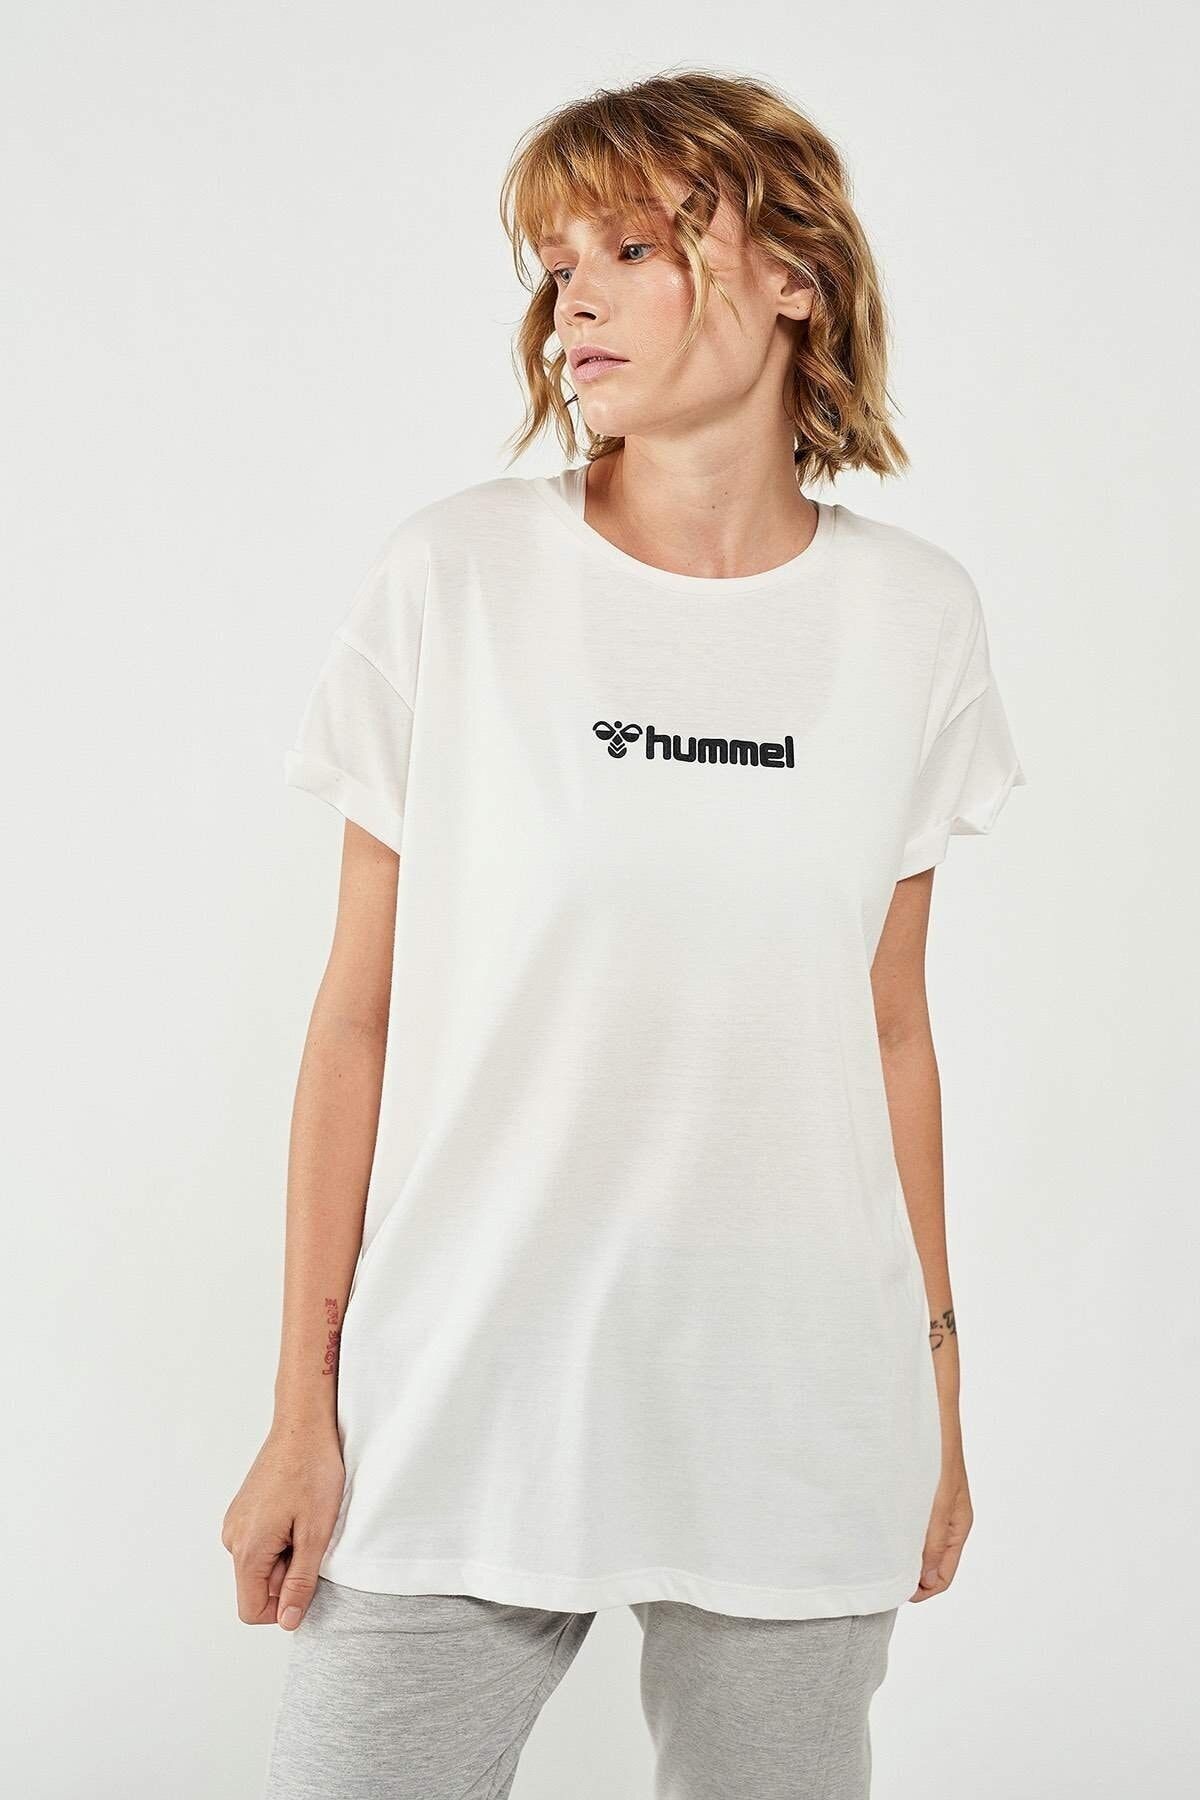 hummel HMLVERANSO Beyaz Kadın T-Shirt 101085887